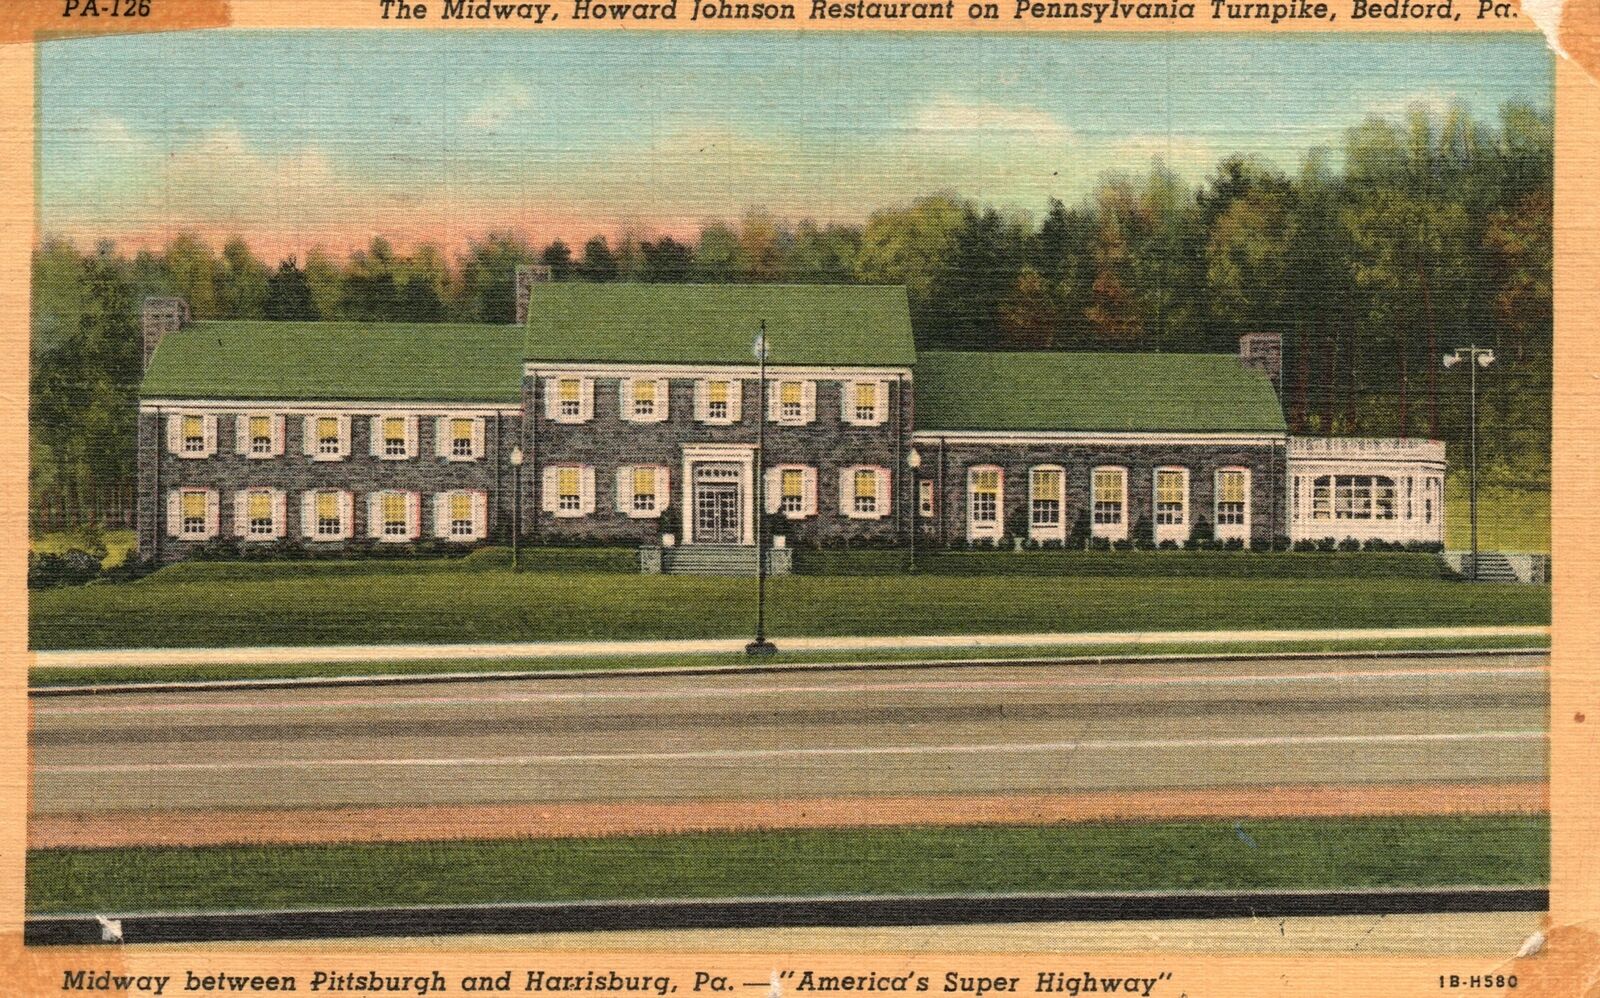 Vintage Postcard 1951 Midway Howard Johnson Restaurant Penn. Turnpike Bedford PA